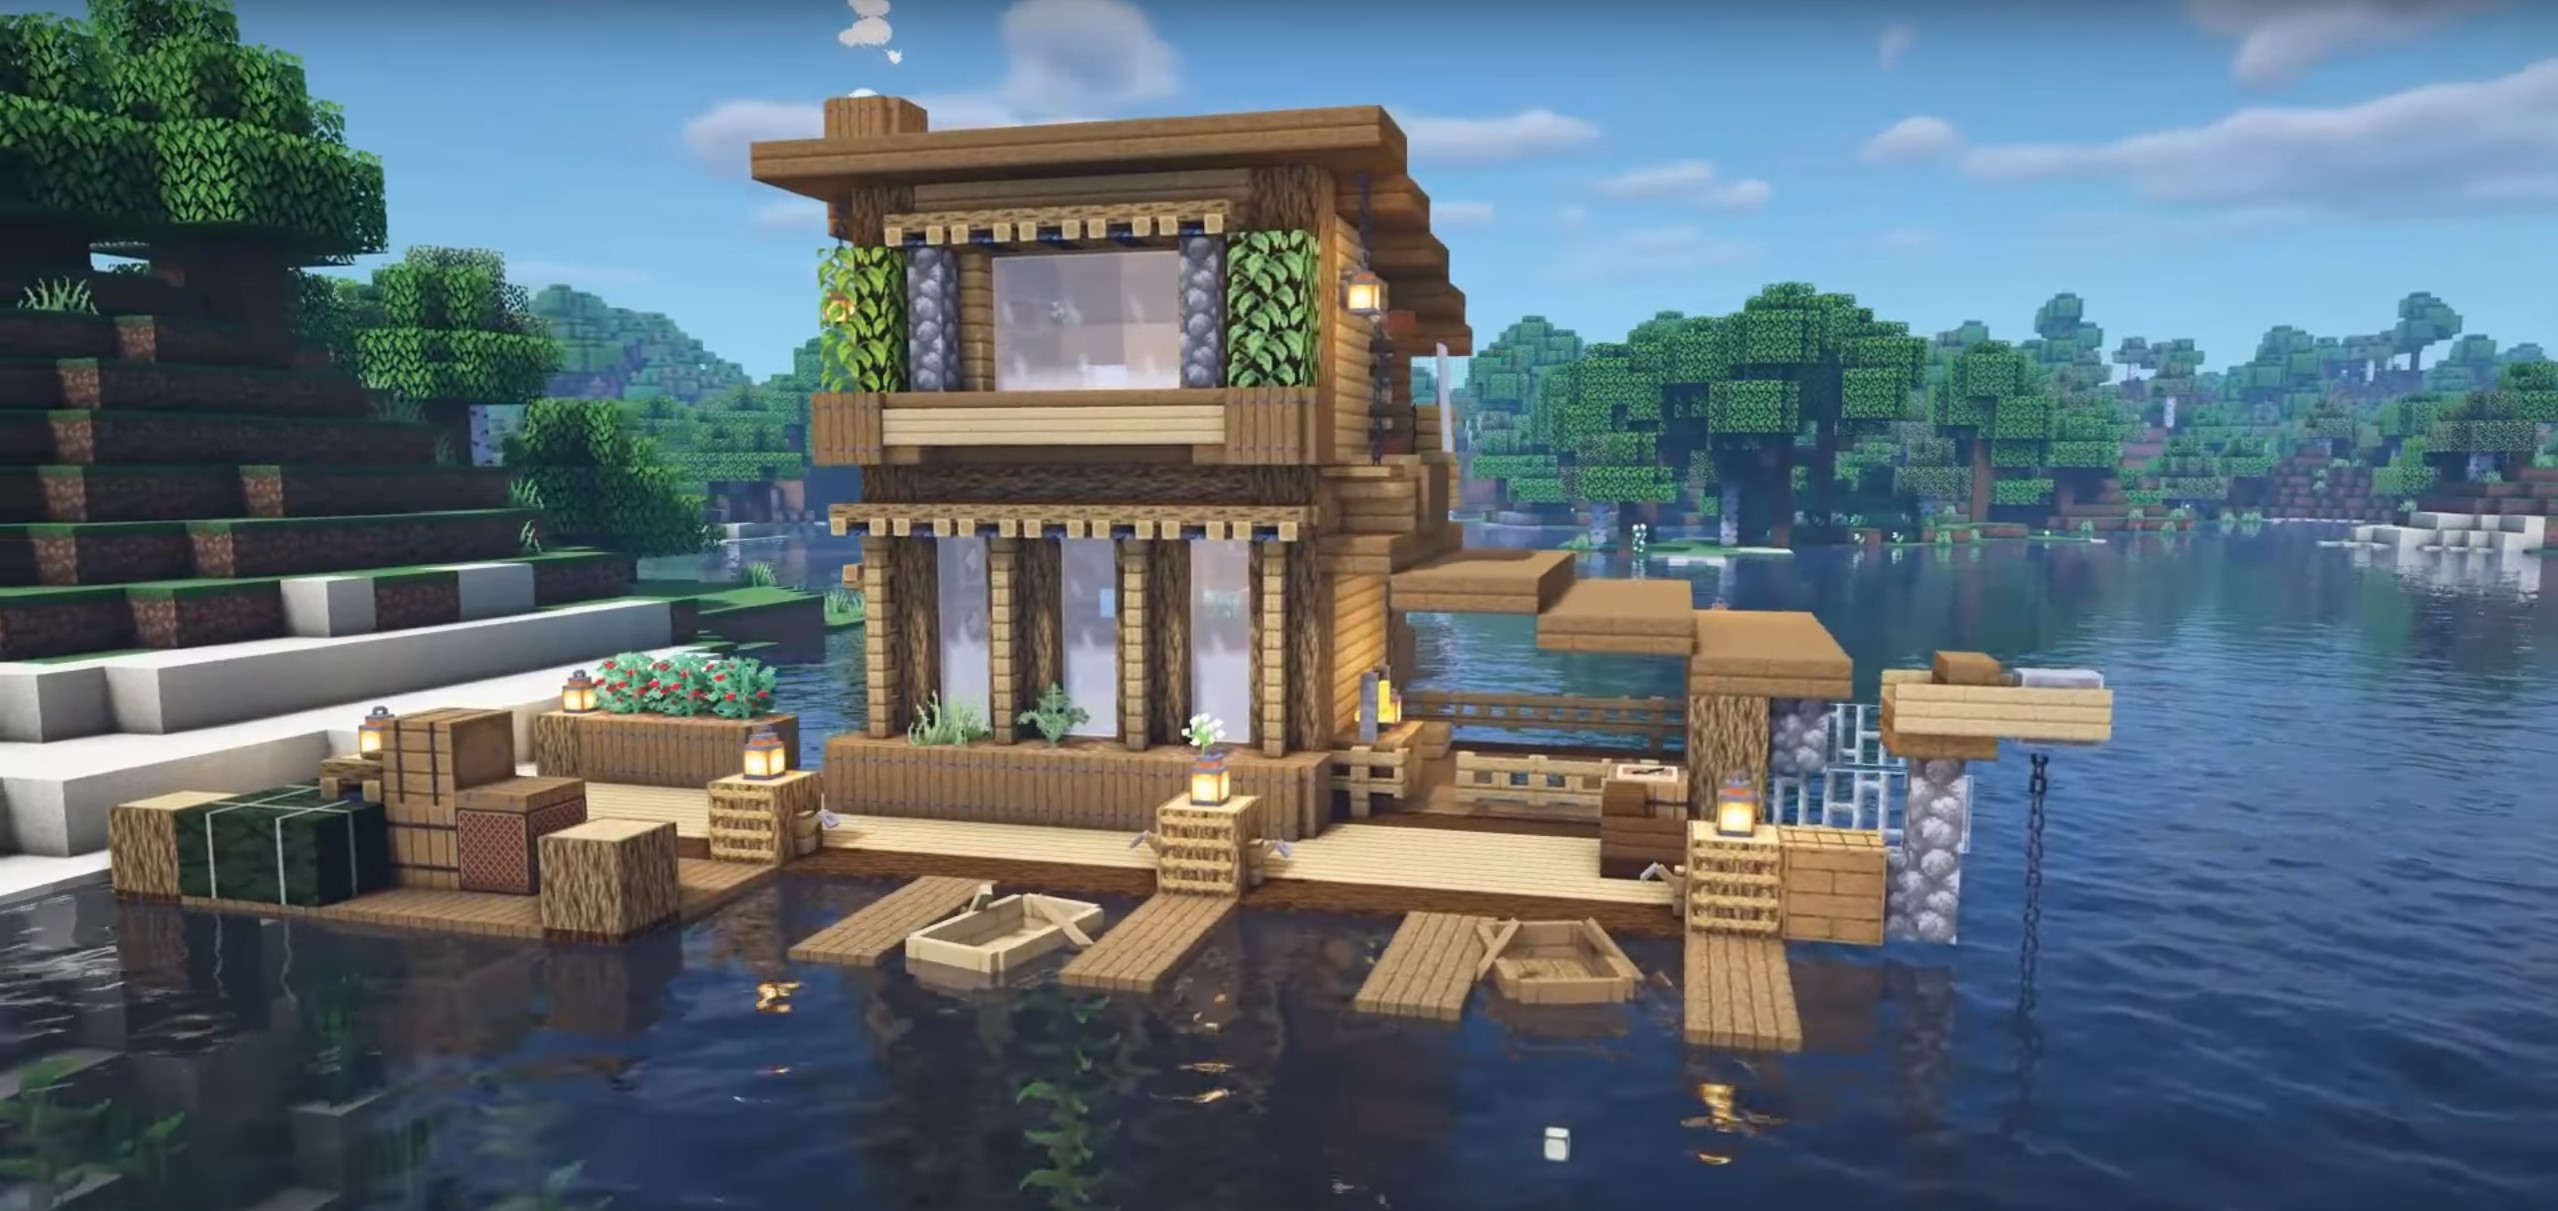 Boat House minecraft building idea